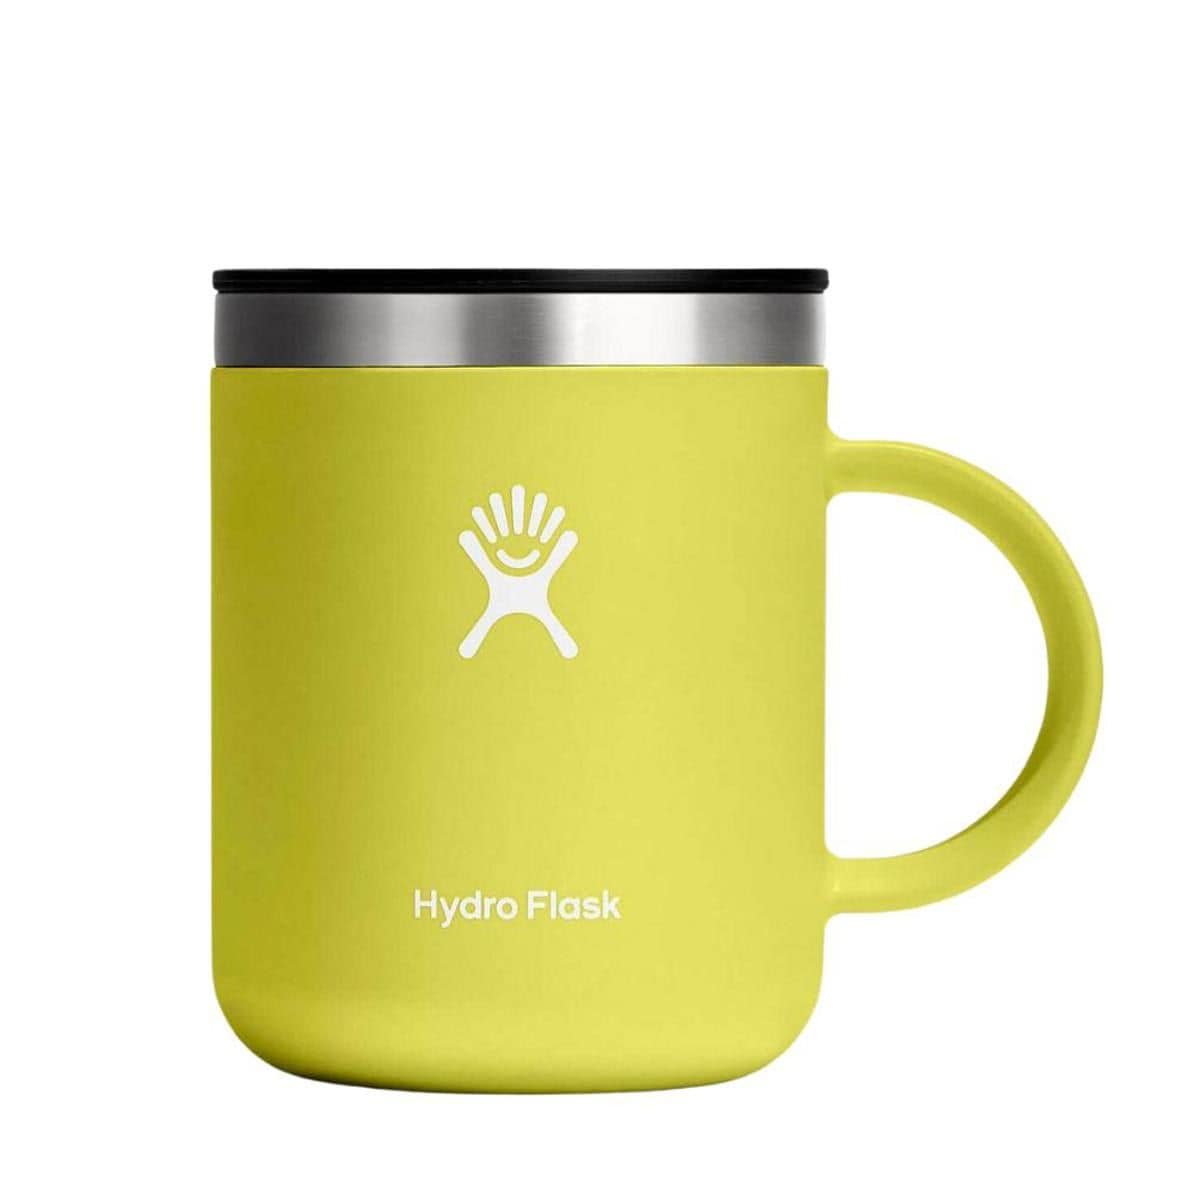 Hydroflask 12oz Mug